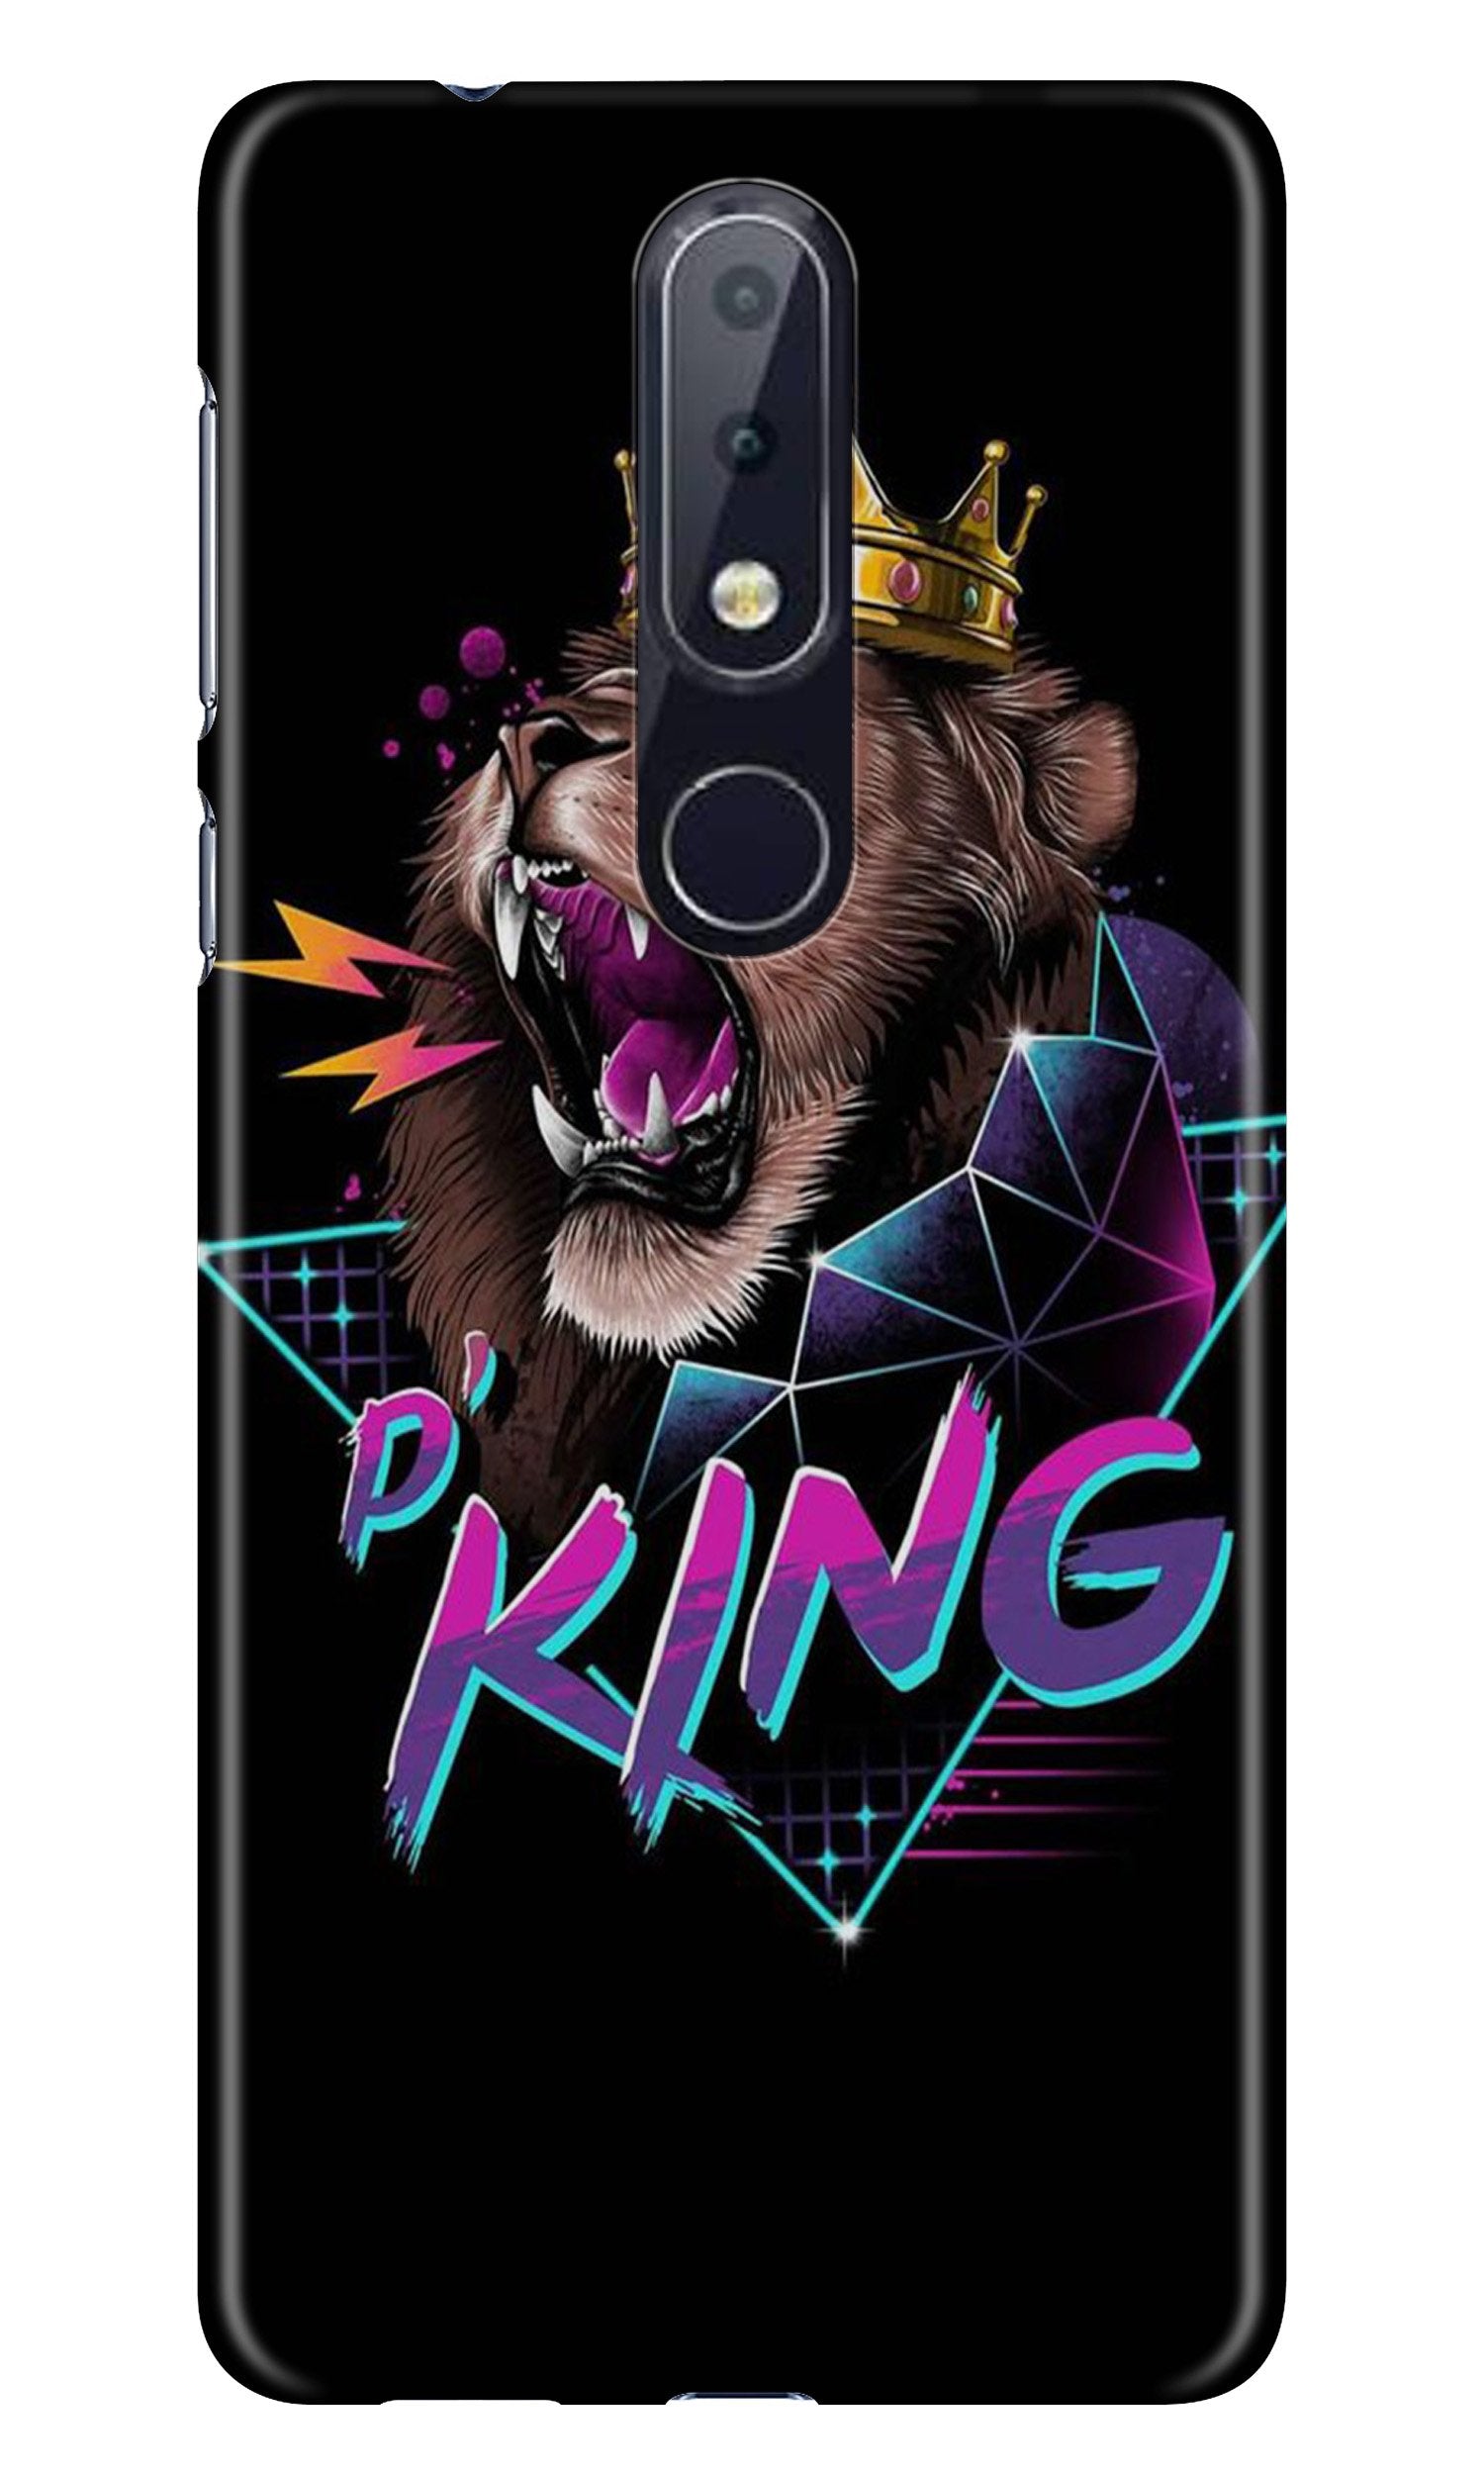 Lion King Case for Nokia 7.1 (Design No. 219)